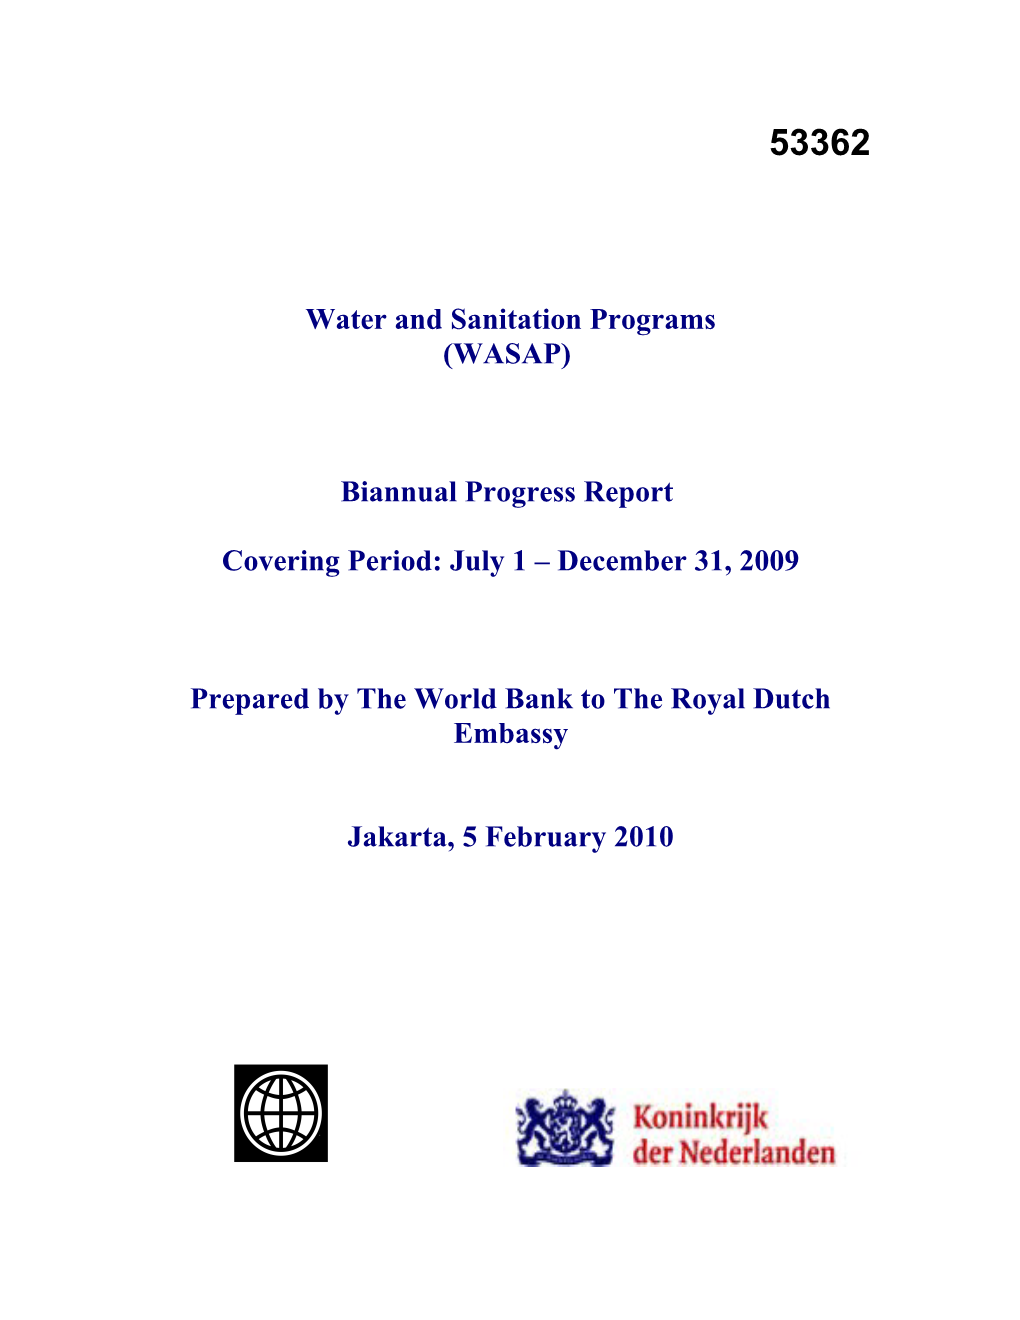 Water and Sanitation Programs